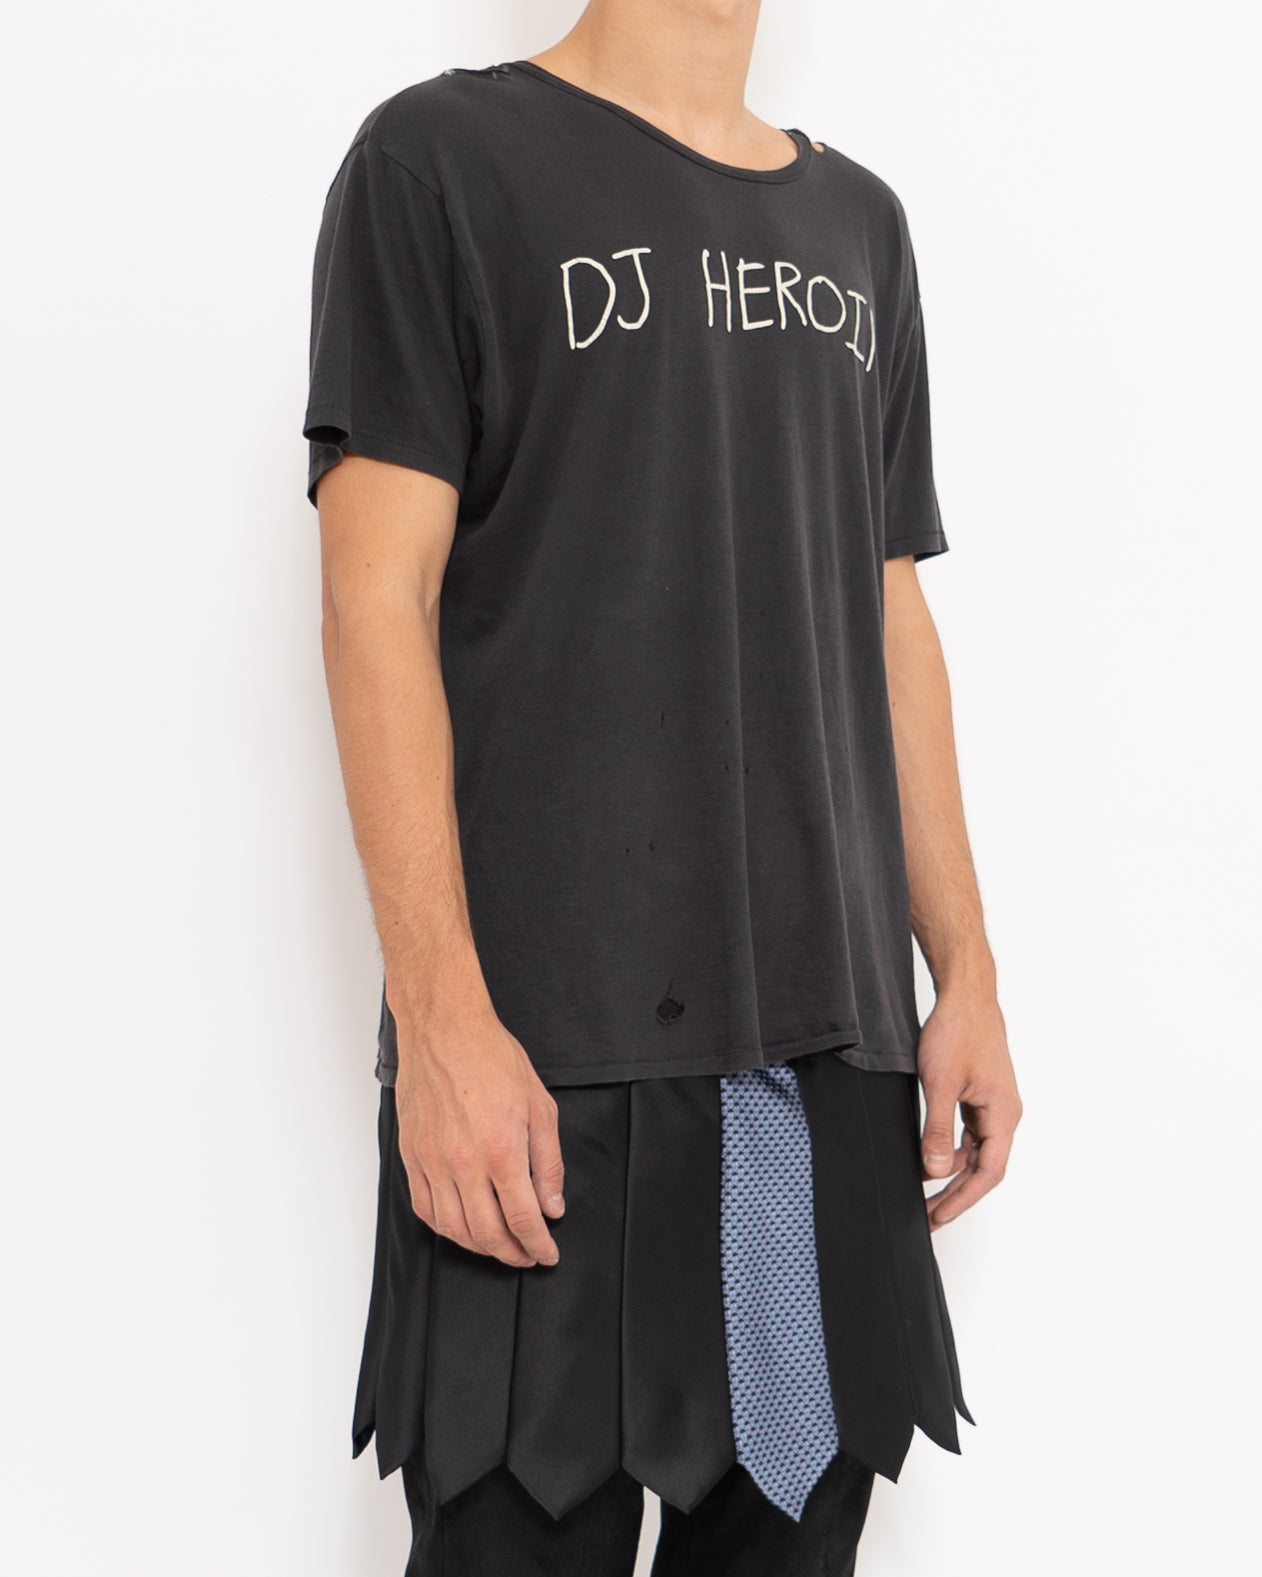 SS14 DJ Heroin Sample T-Shirt